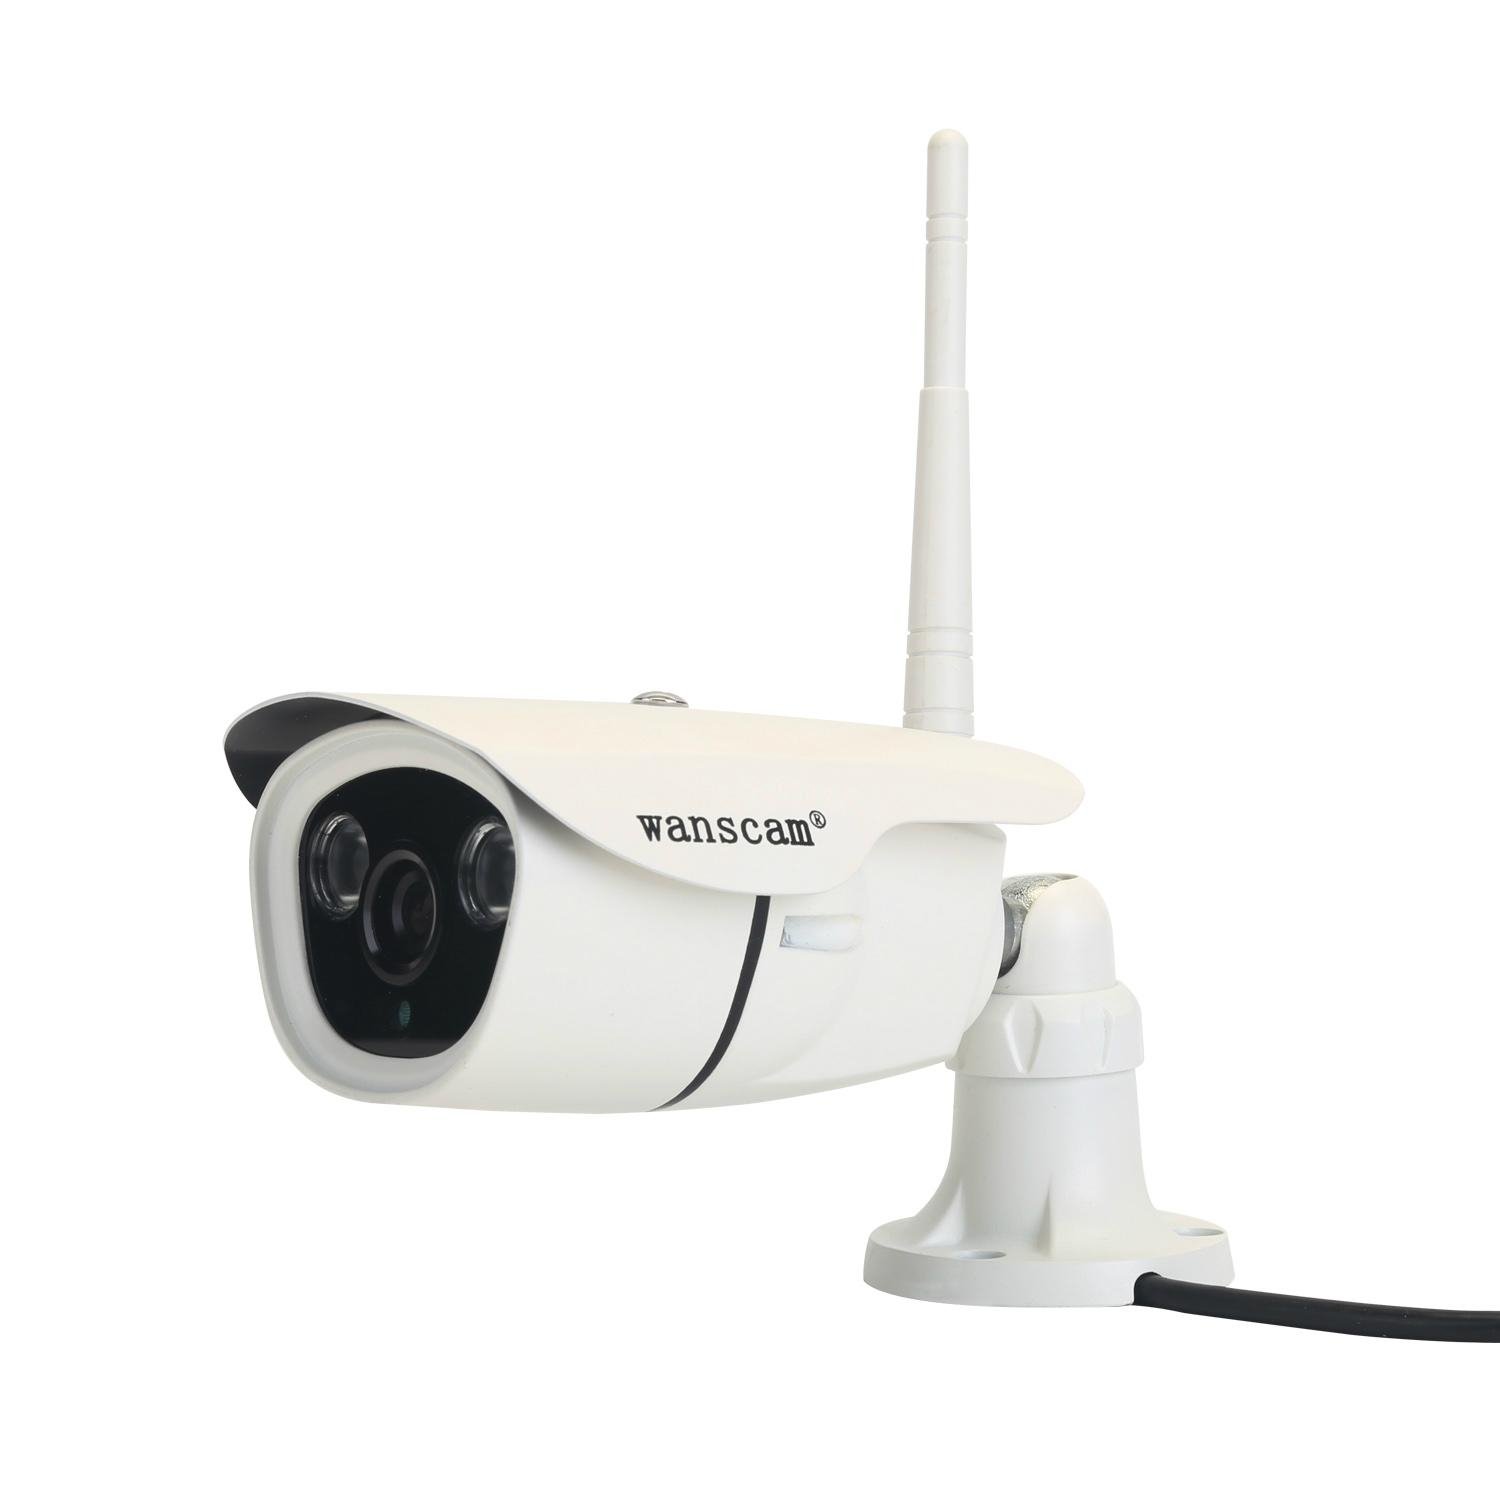 2016 Wanscam New Arrival White Mini 1.3Megapixel Onvif Outdoor POE IP Camera